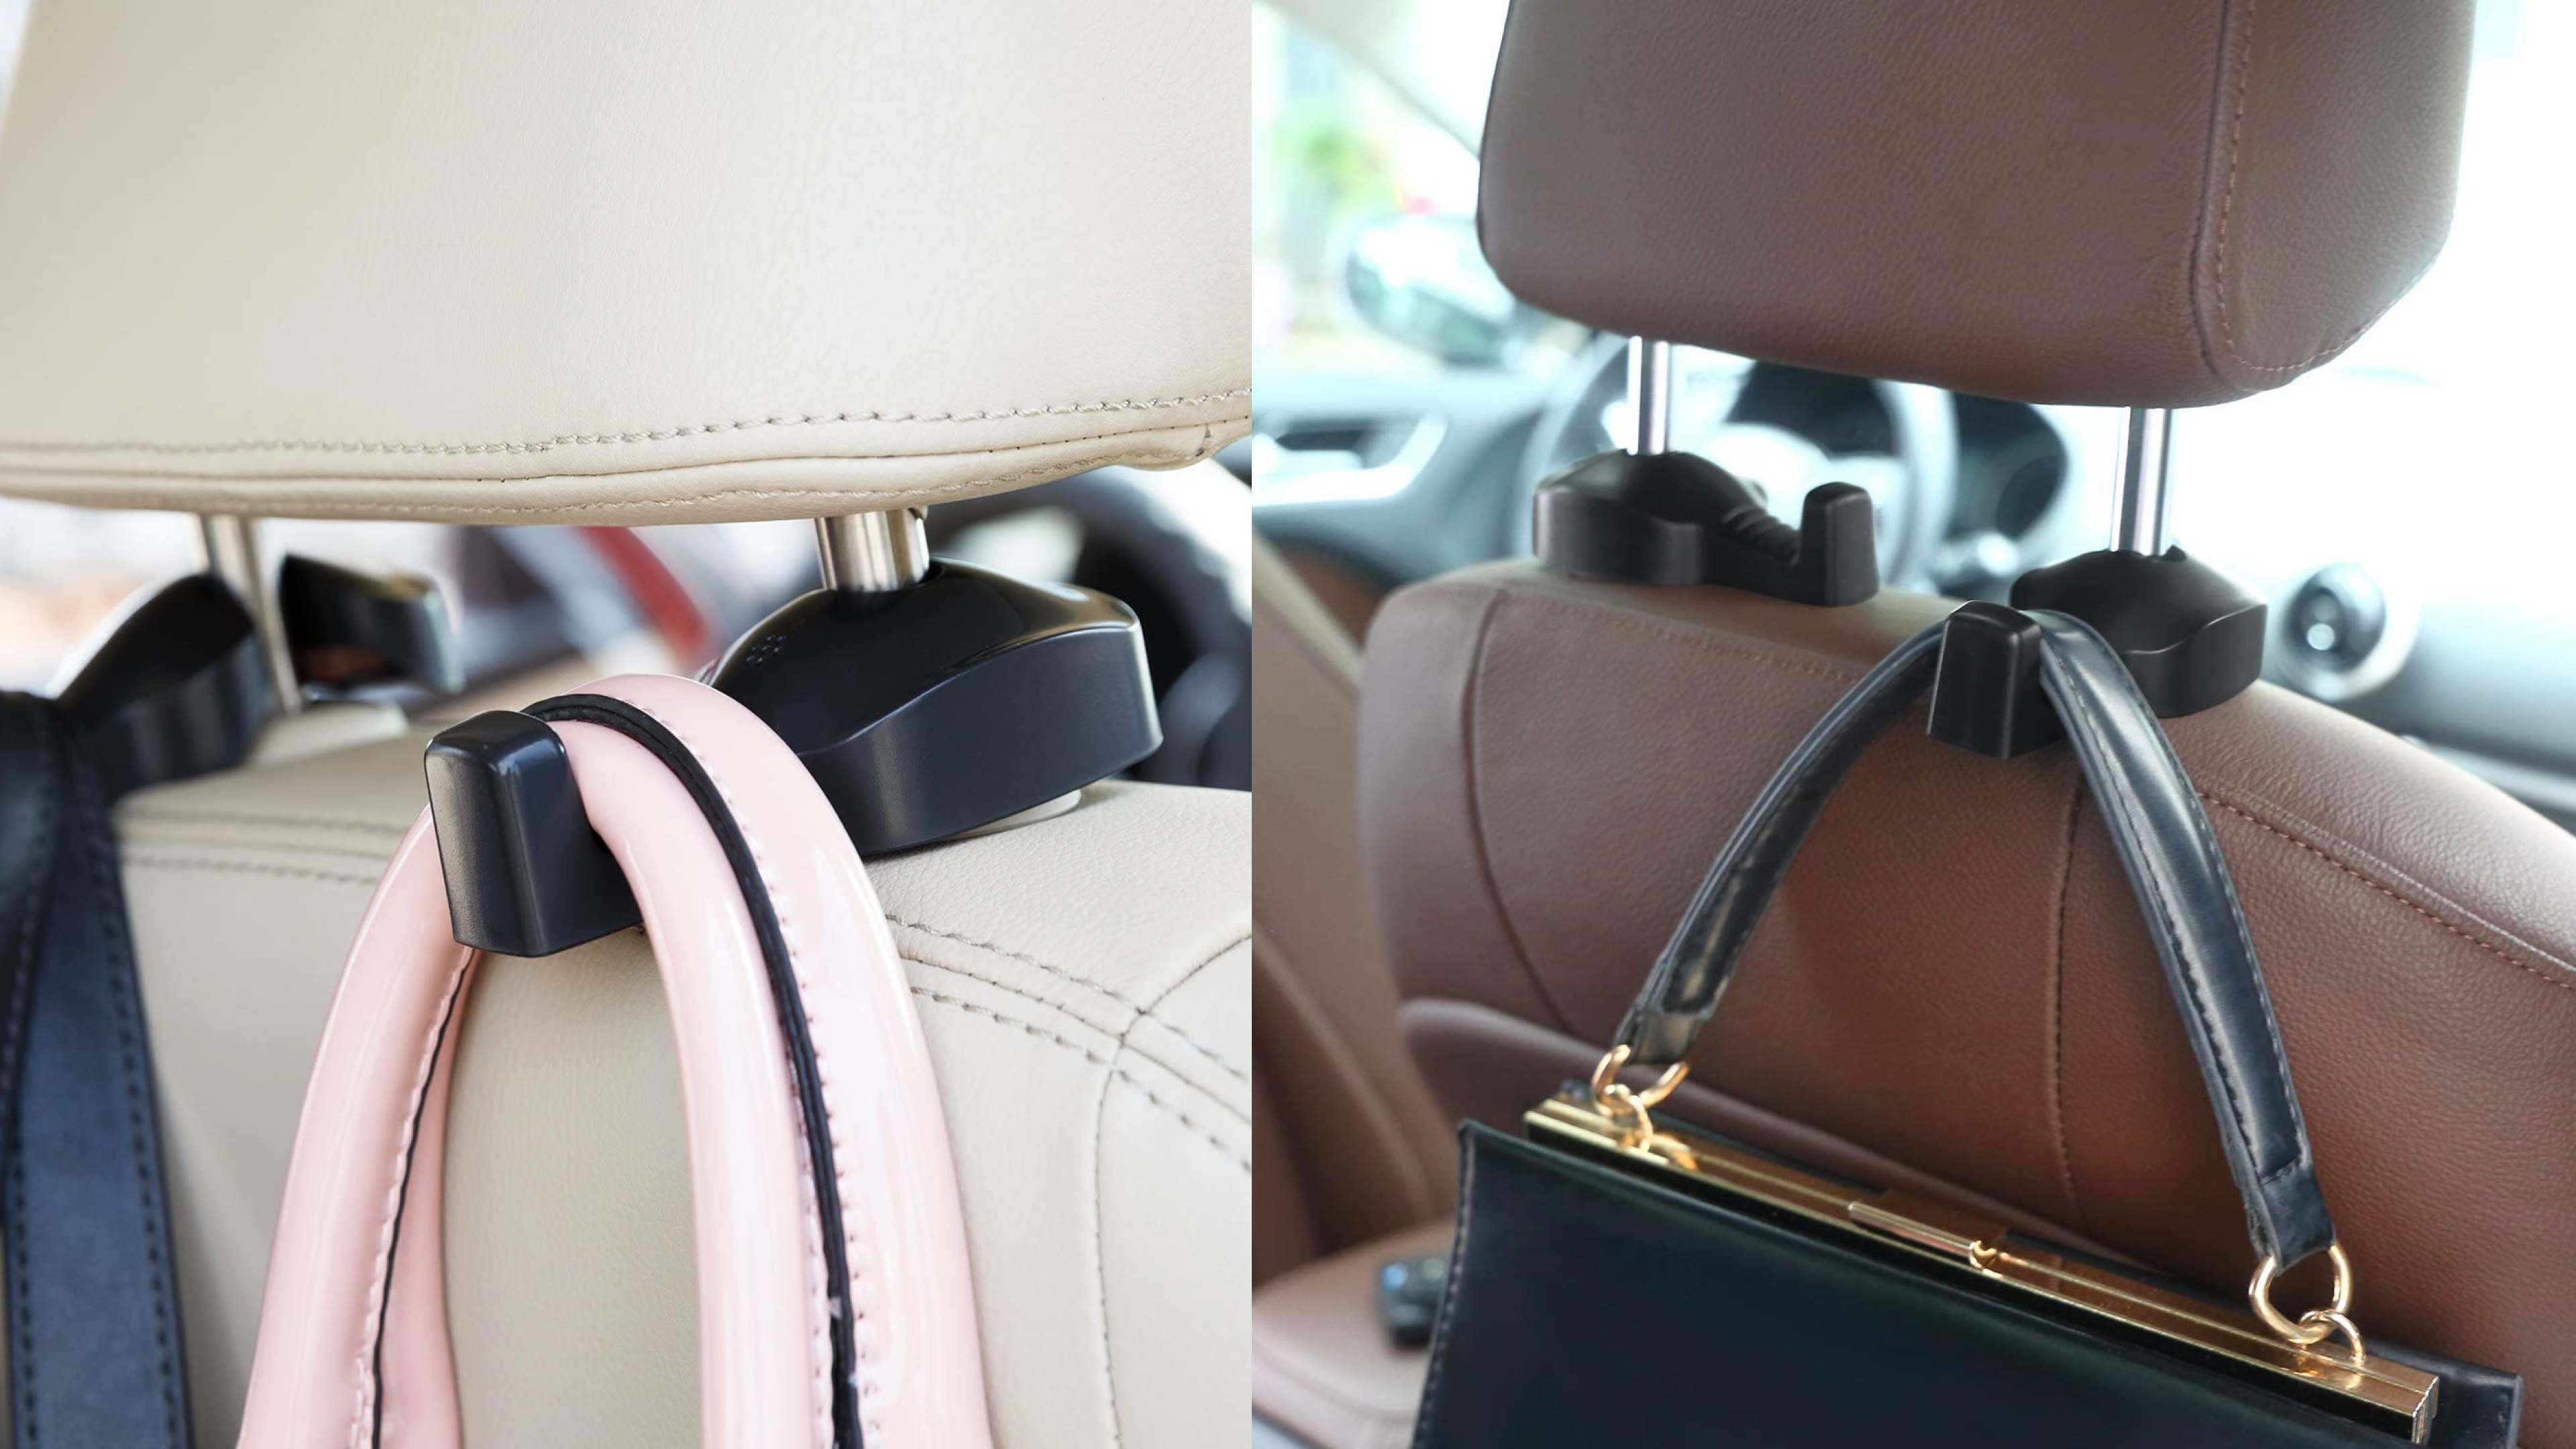 car handbag hook to hold bags 